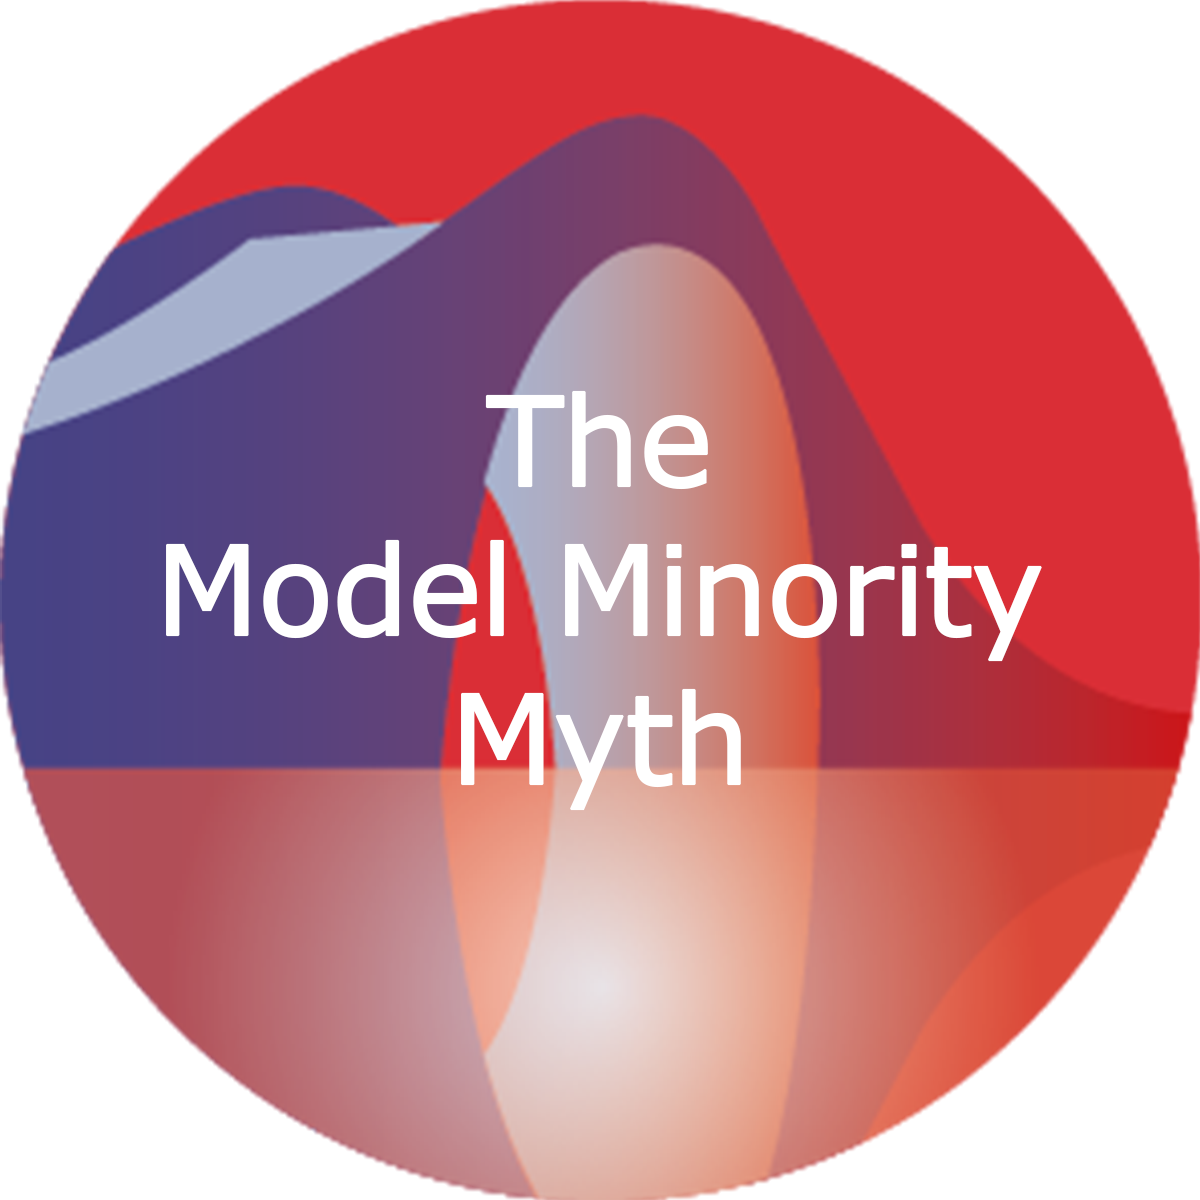 Article: The Model Minority Myth